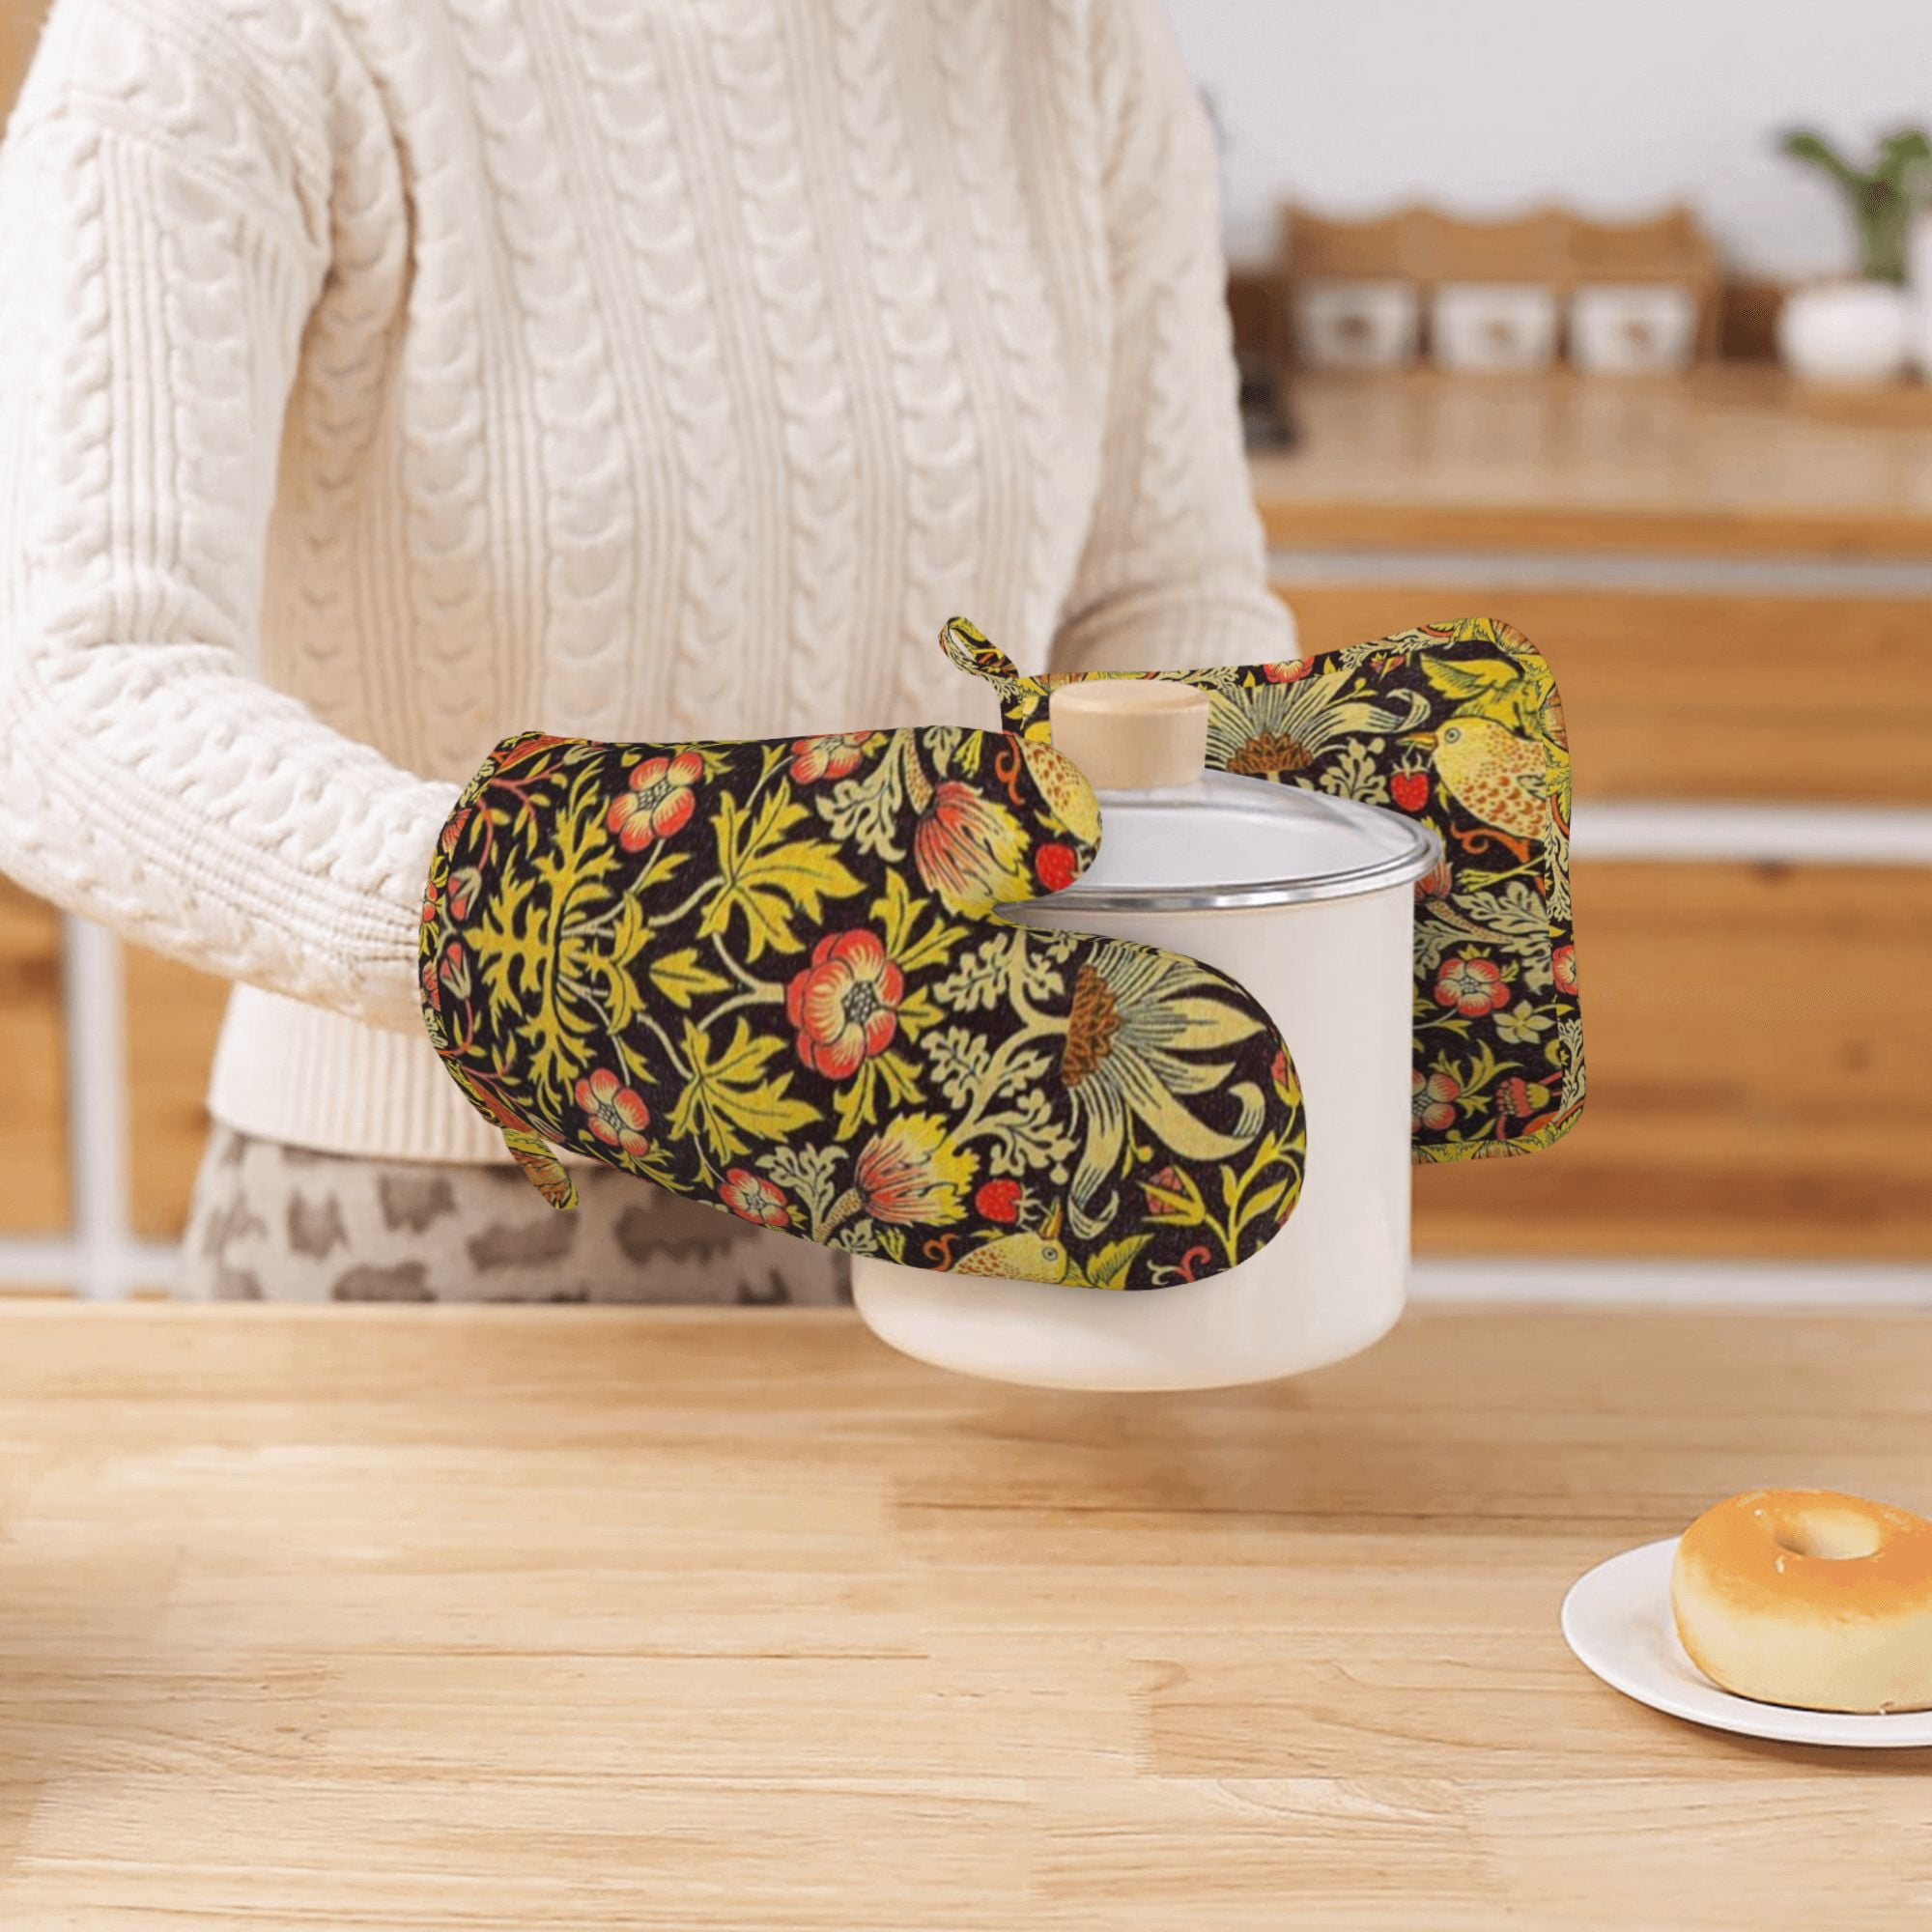 Woodpecker Print Double Oven Gloves - oven mitt - pot holder - bird print -  kitchenware - kitchen textiles - baking mitts - patterned